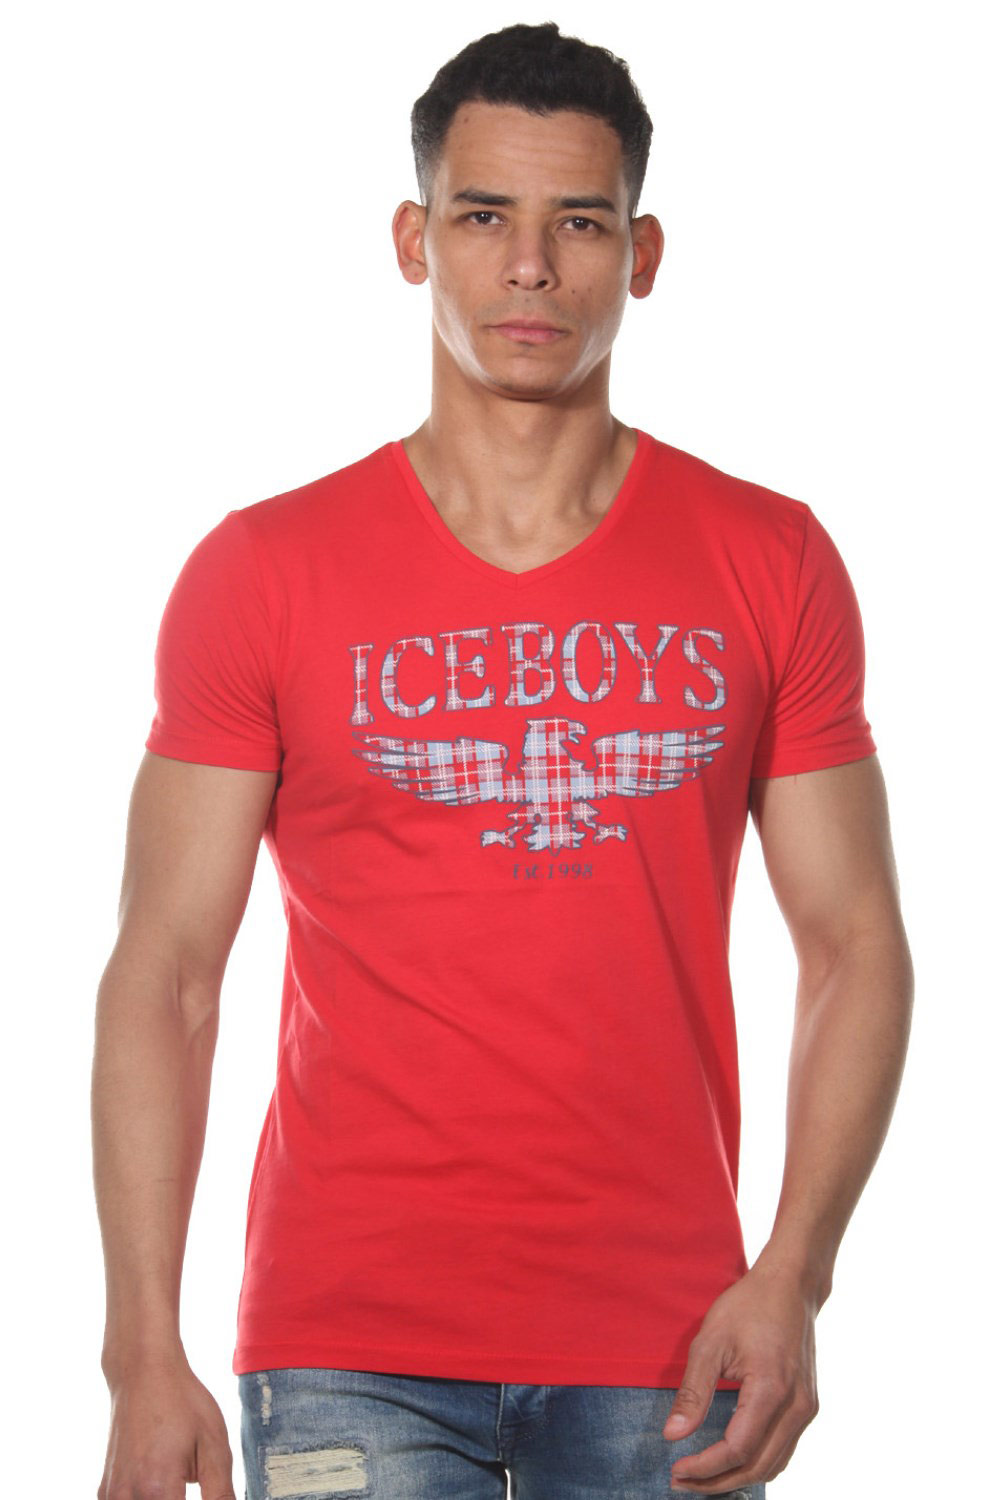 ICE BOYS T-shirt at oboy.com